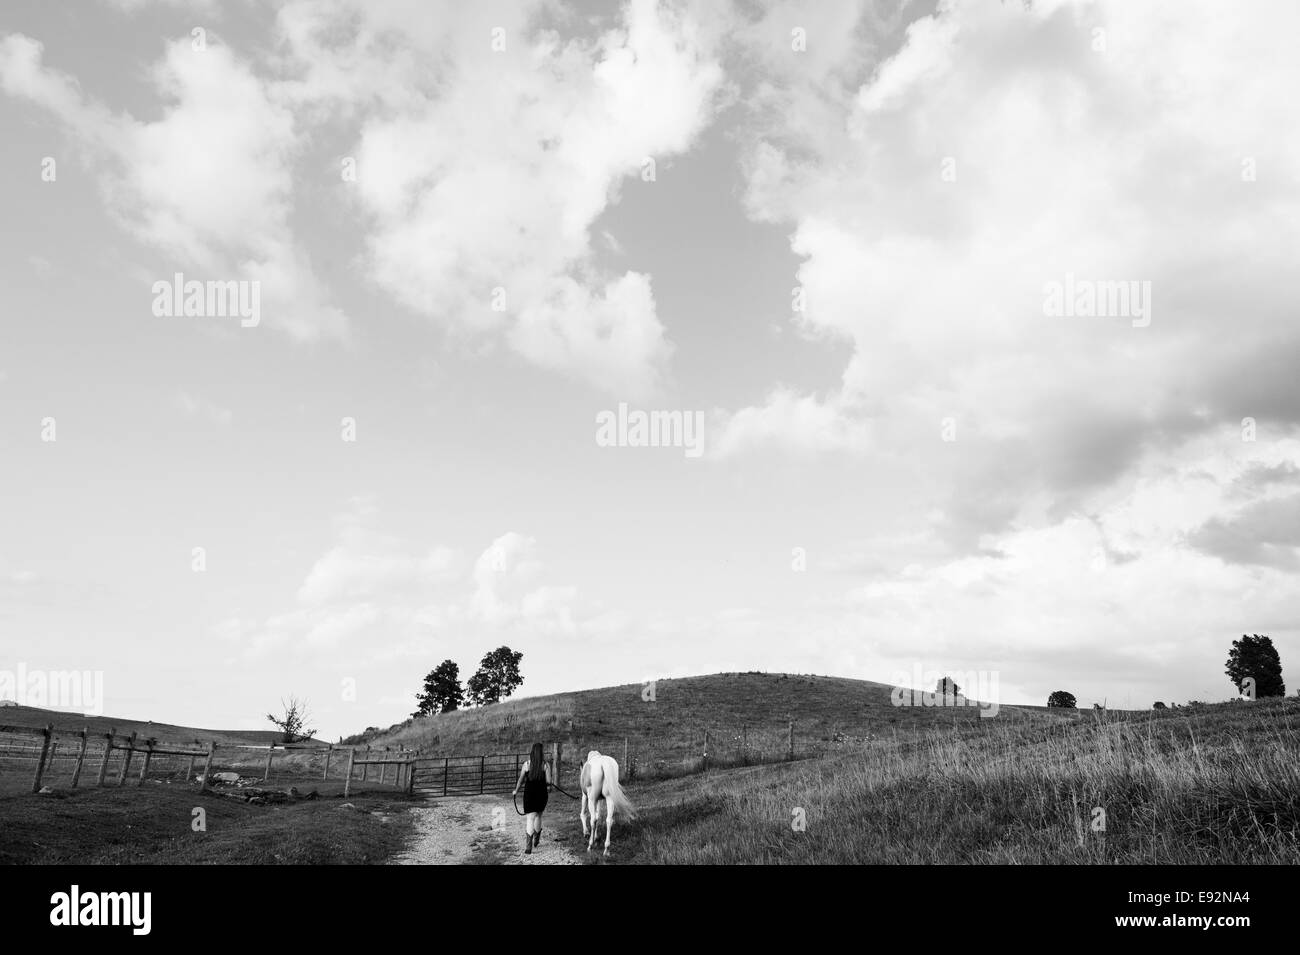 Young Women in Black Dress Walking Horse Along Rural Path in Field, Rear View Stock Photo